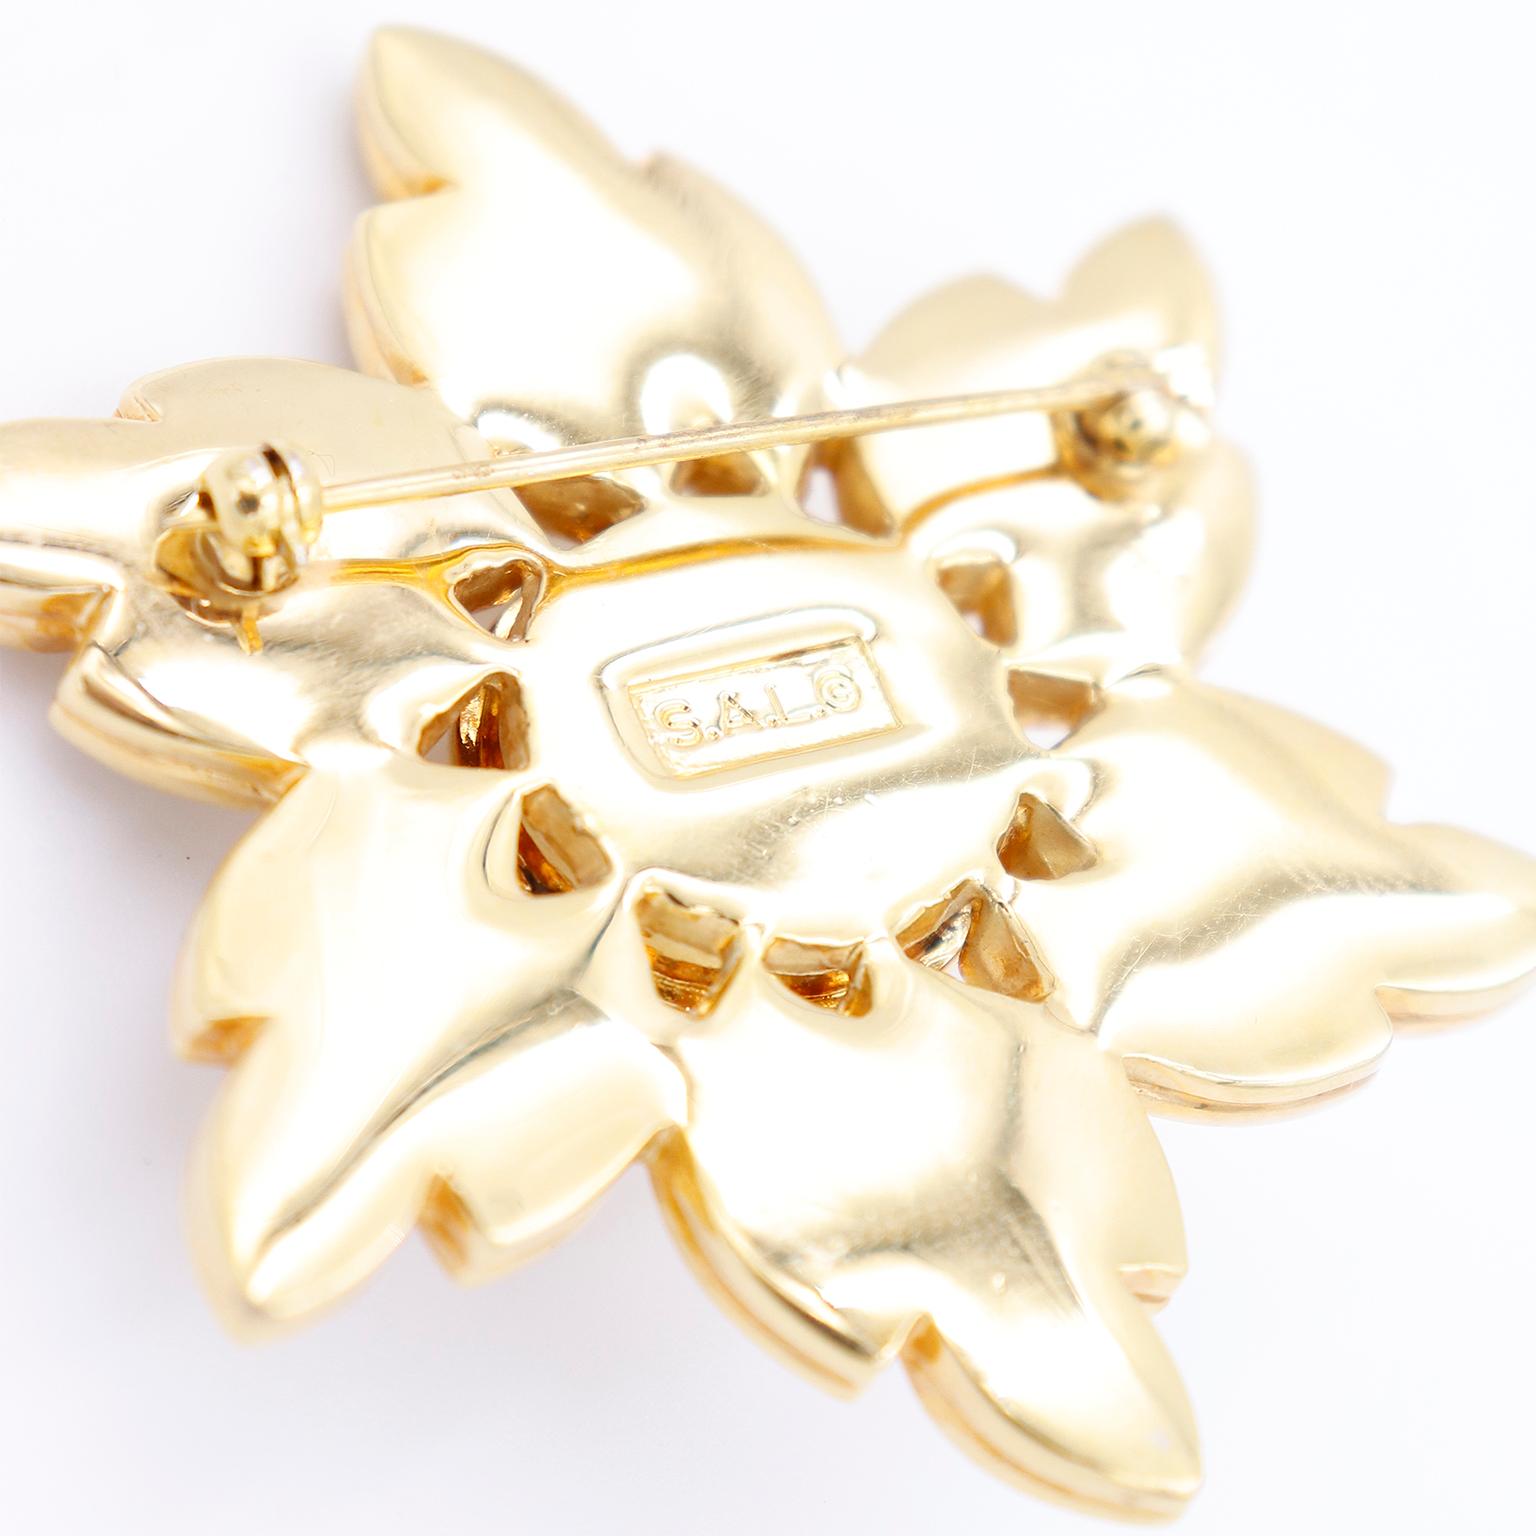 Marquise Cut Swarovski Crystal Gold Plate Star Flower Brooch with SAL hallmark